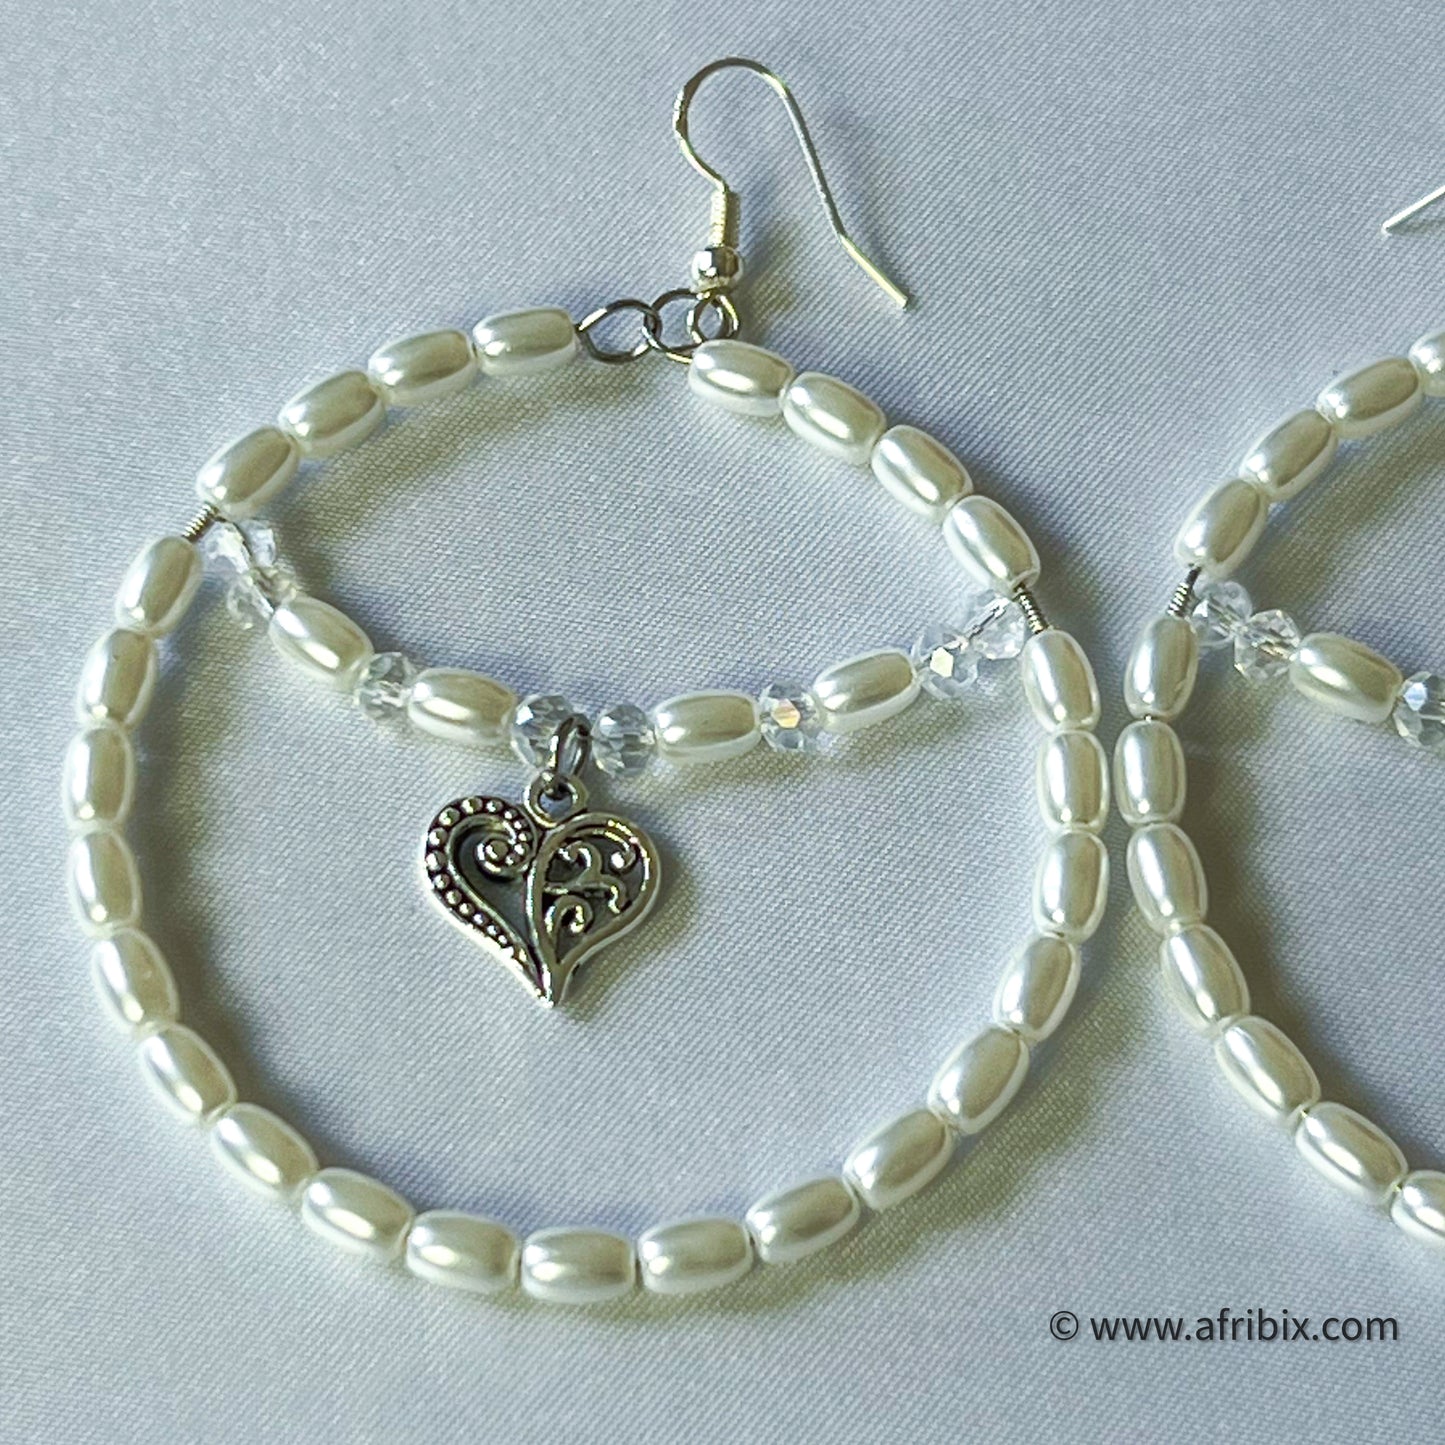 Allure Necklace Earring and Bracelet set